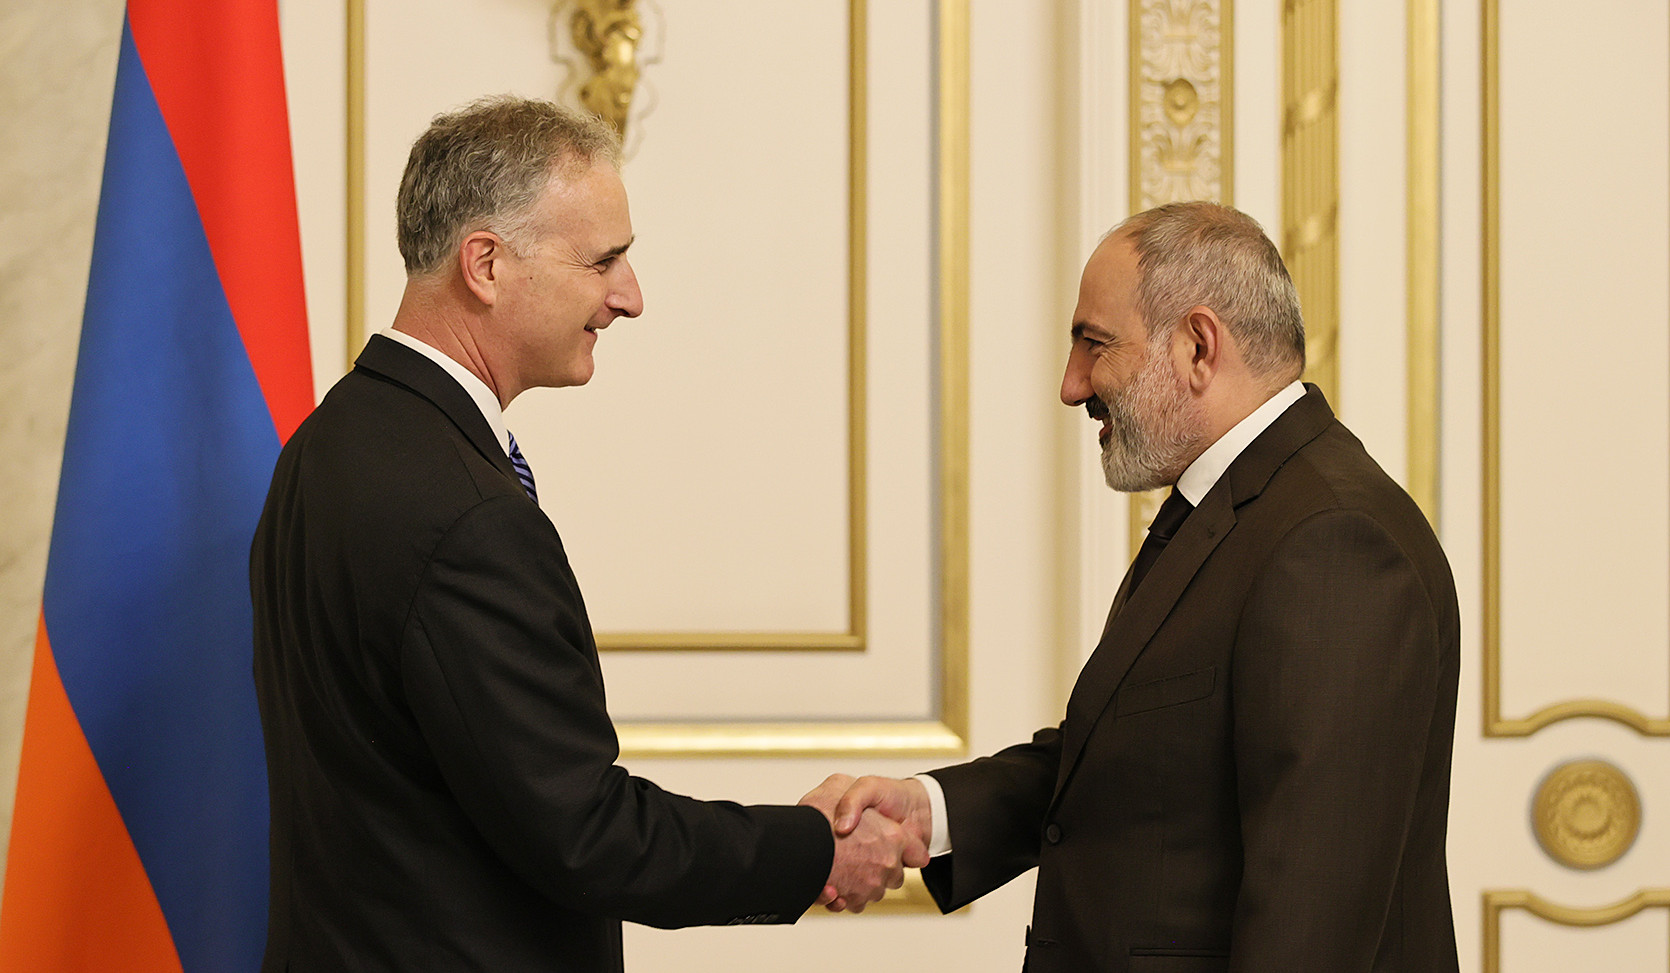 Prime Minister Pashinyan receives Louis Bono